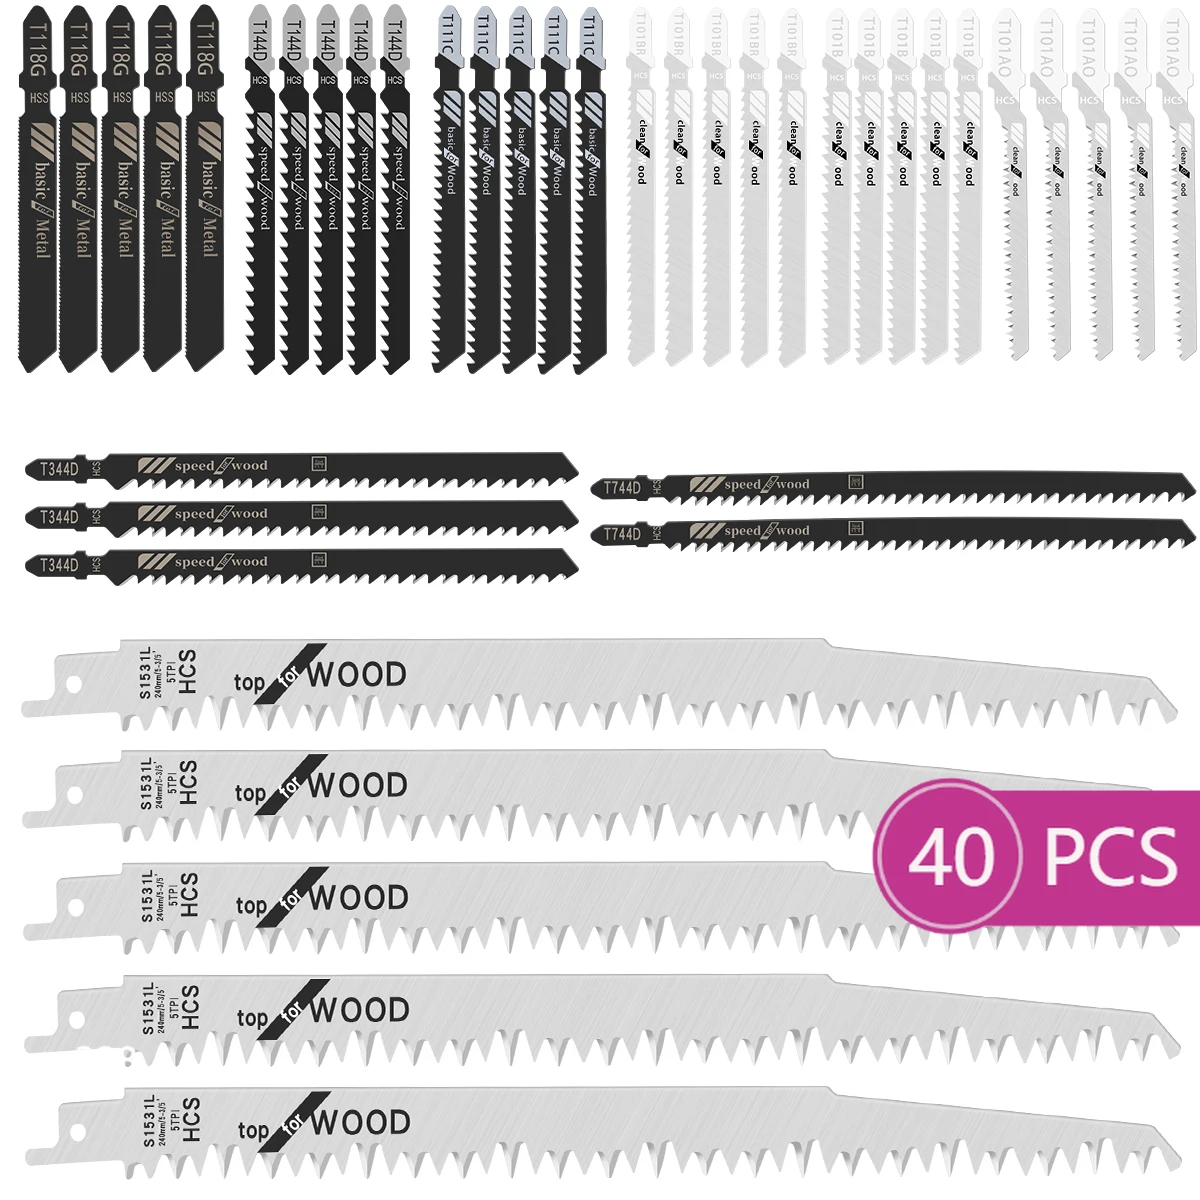 

40Pcs Jig Saw Blade Set HCS Assorted Saw Blades With T-shank Sharp Fast Cut Down Jigsaw Blade For Wood Metal Plastic Cutting